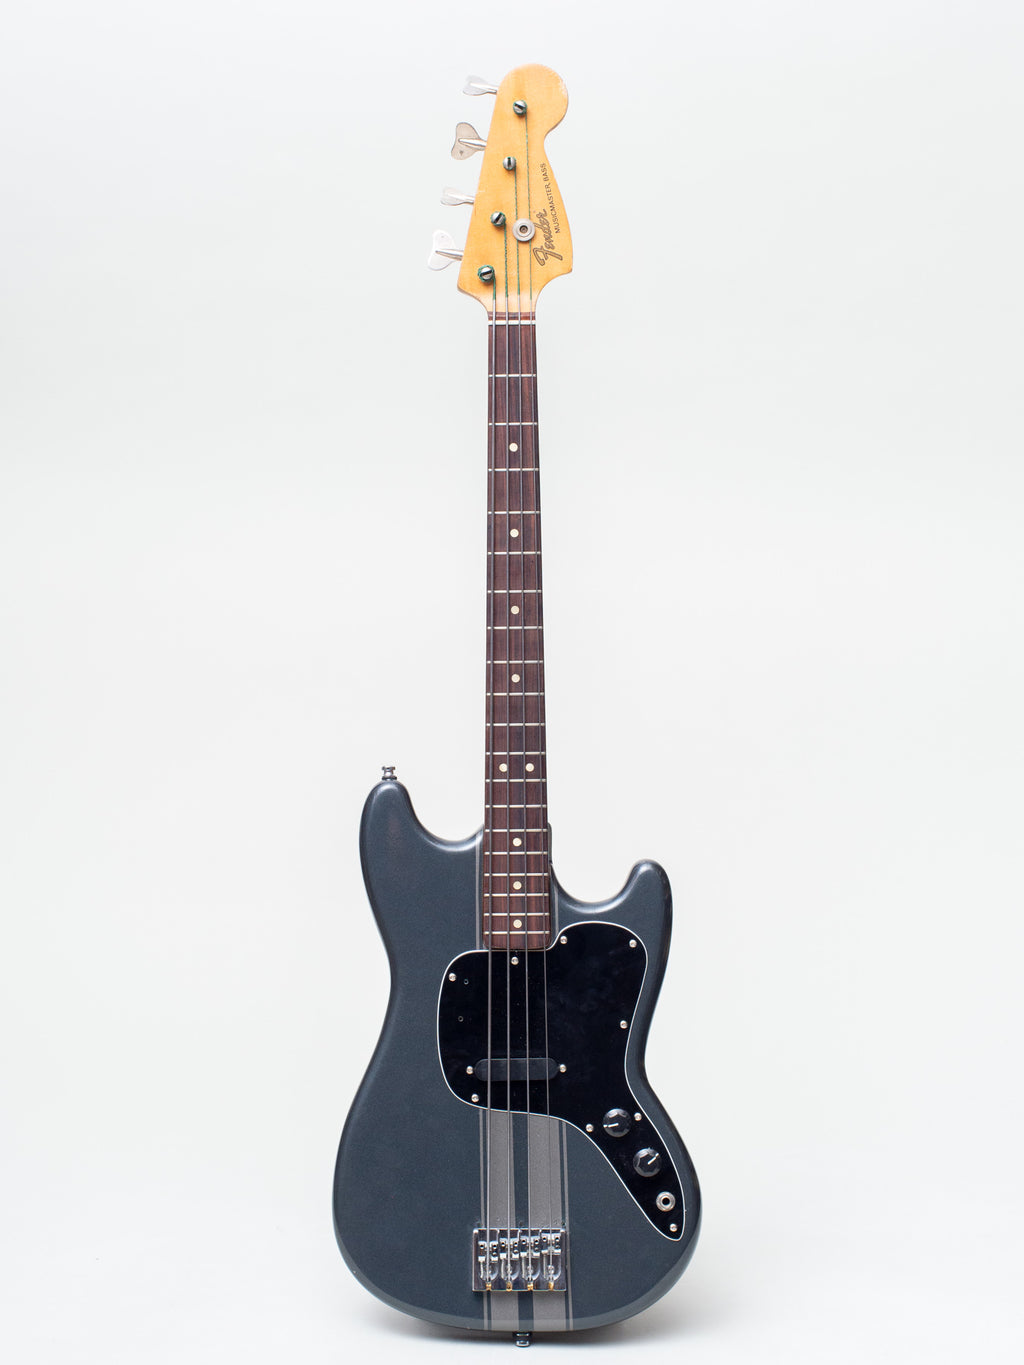 1974 Fender Musicmaster Bass